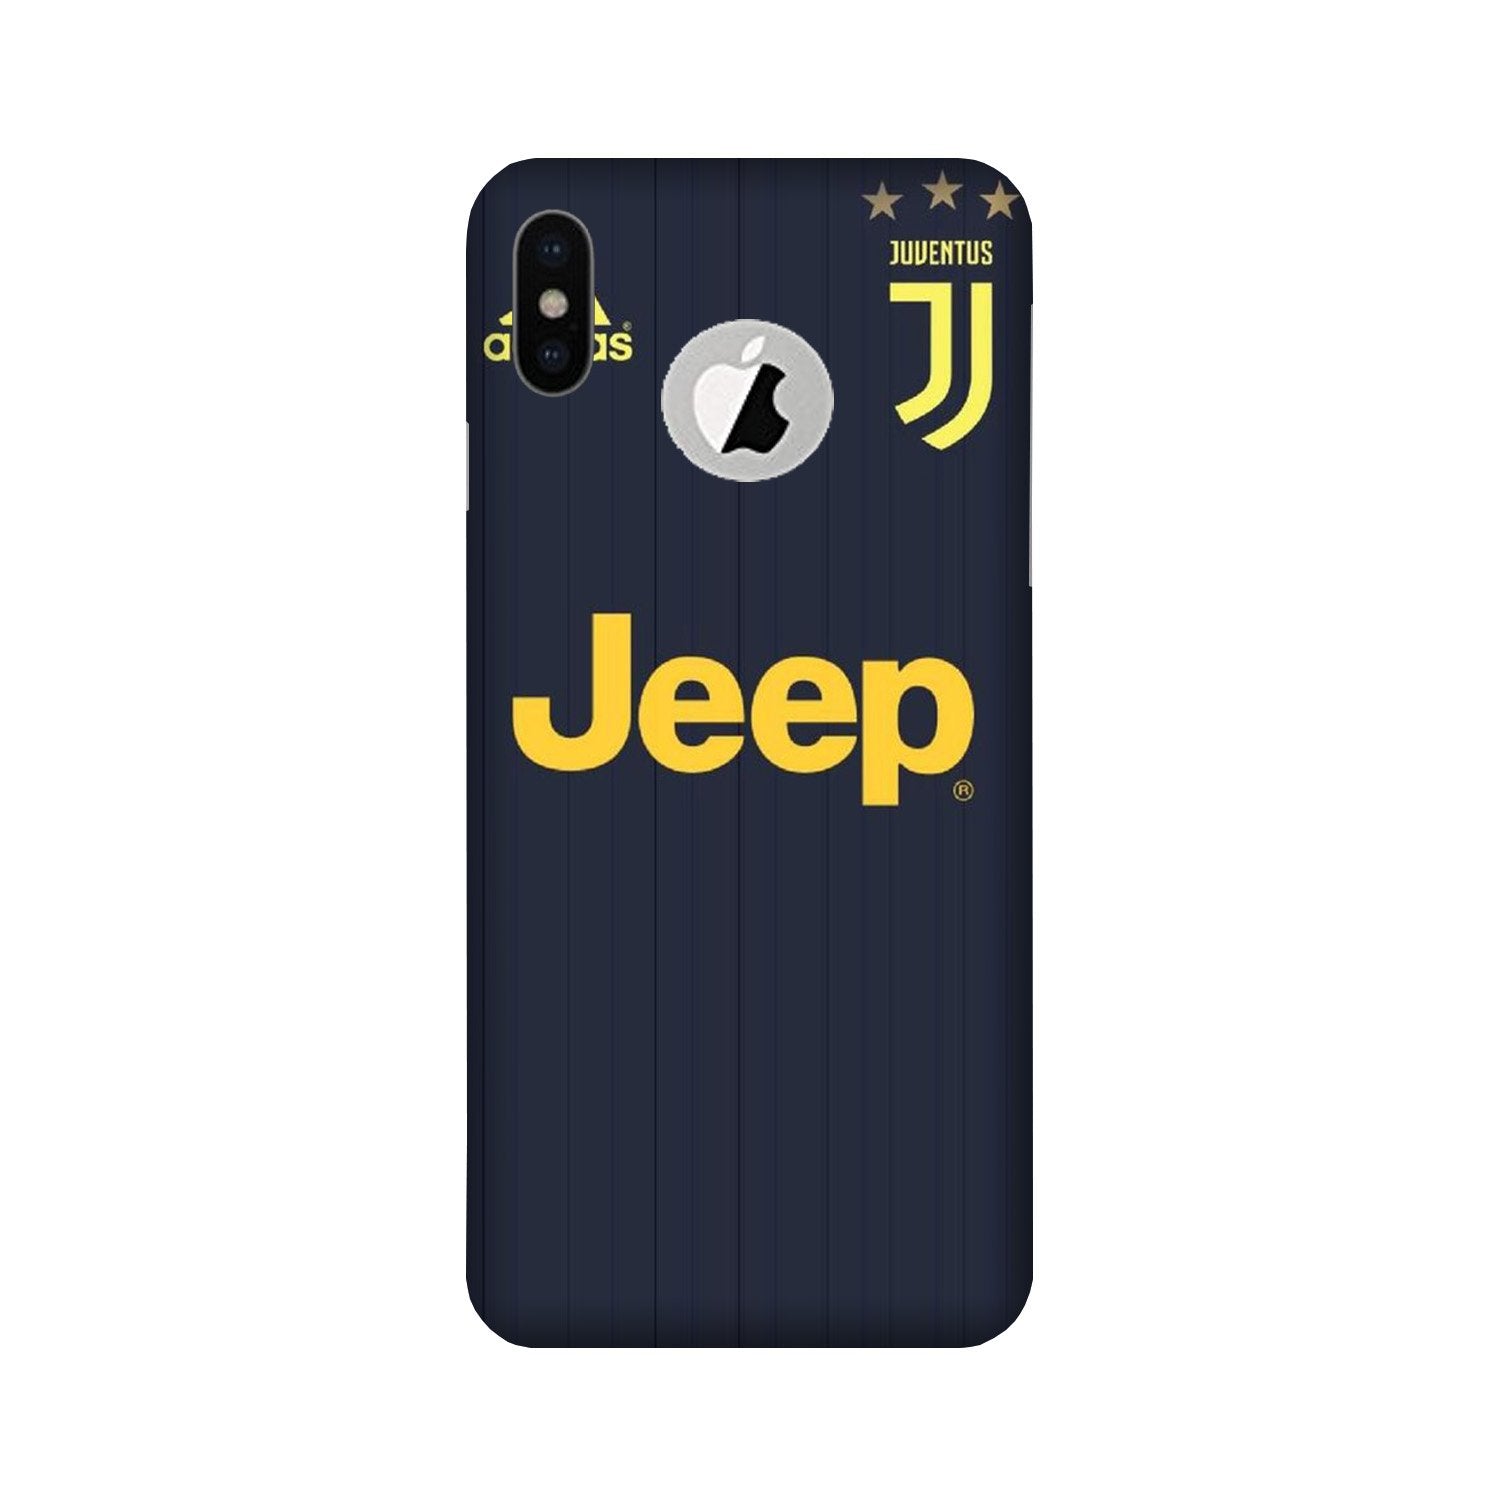 Jeep Juventus Case for iPhone X logo cut  (Design - 161)